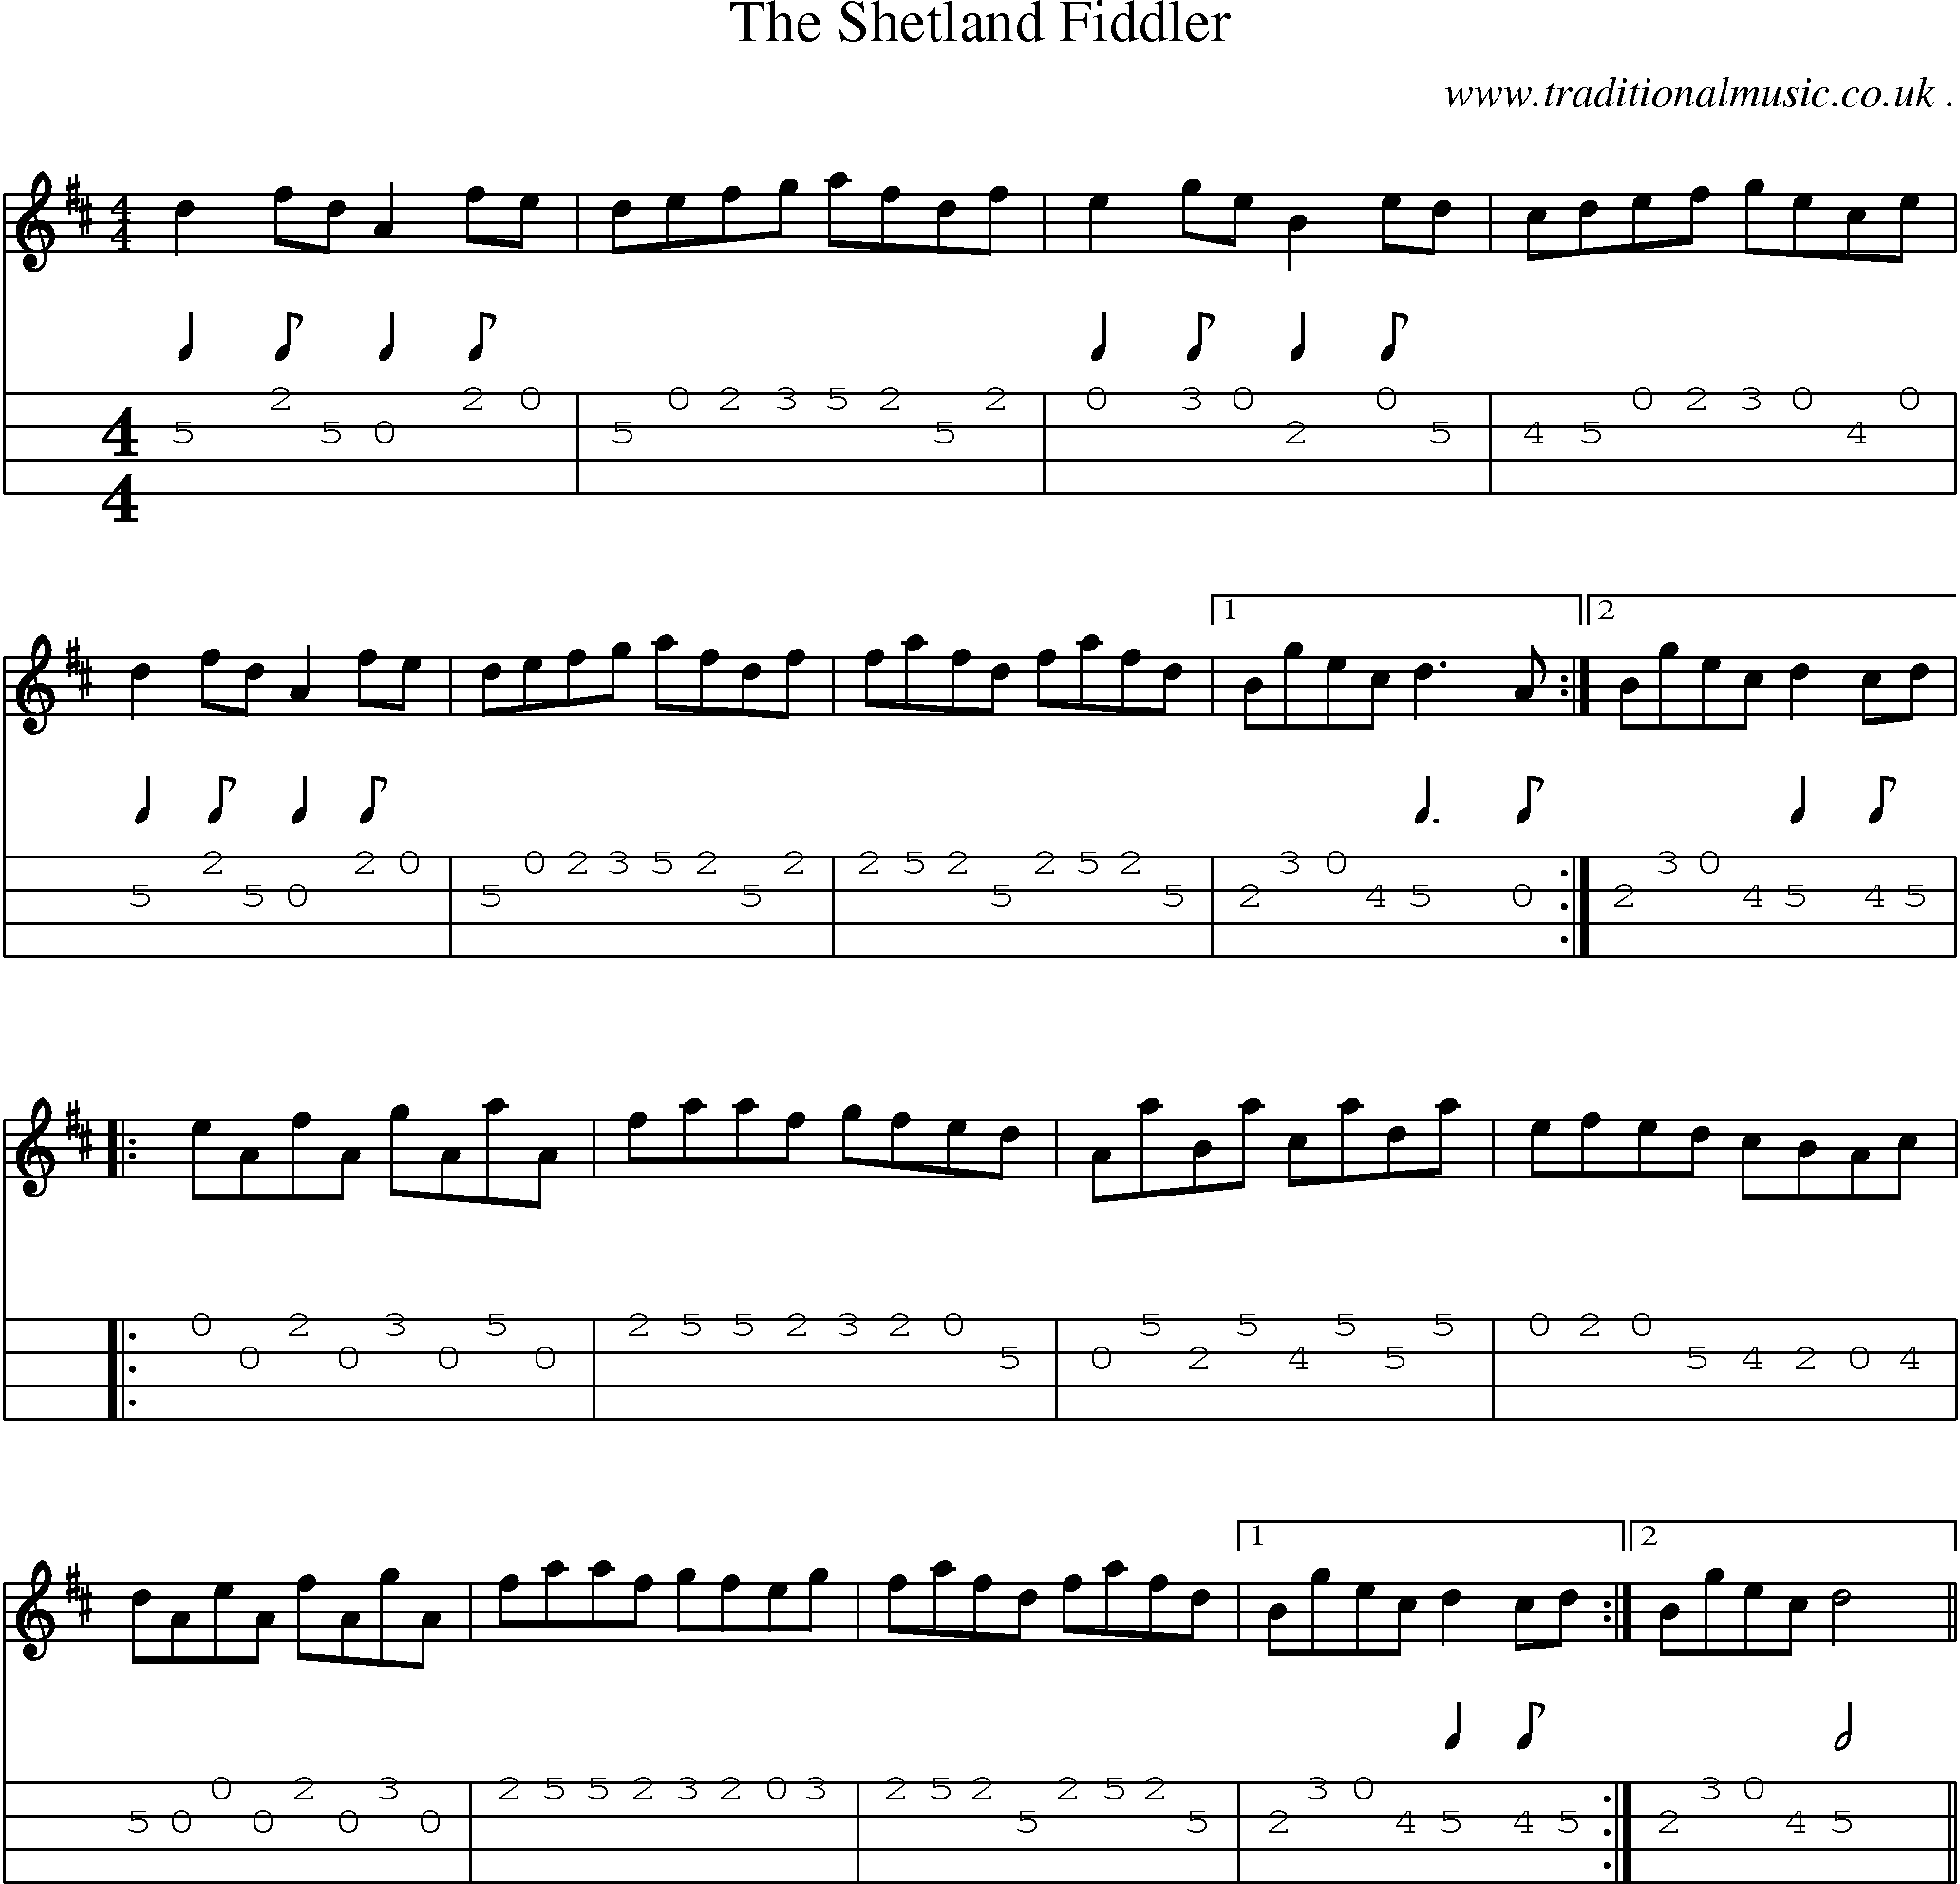 Sheet-Music and Mandolin Tabs for The Shetland Fiddler